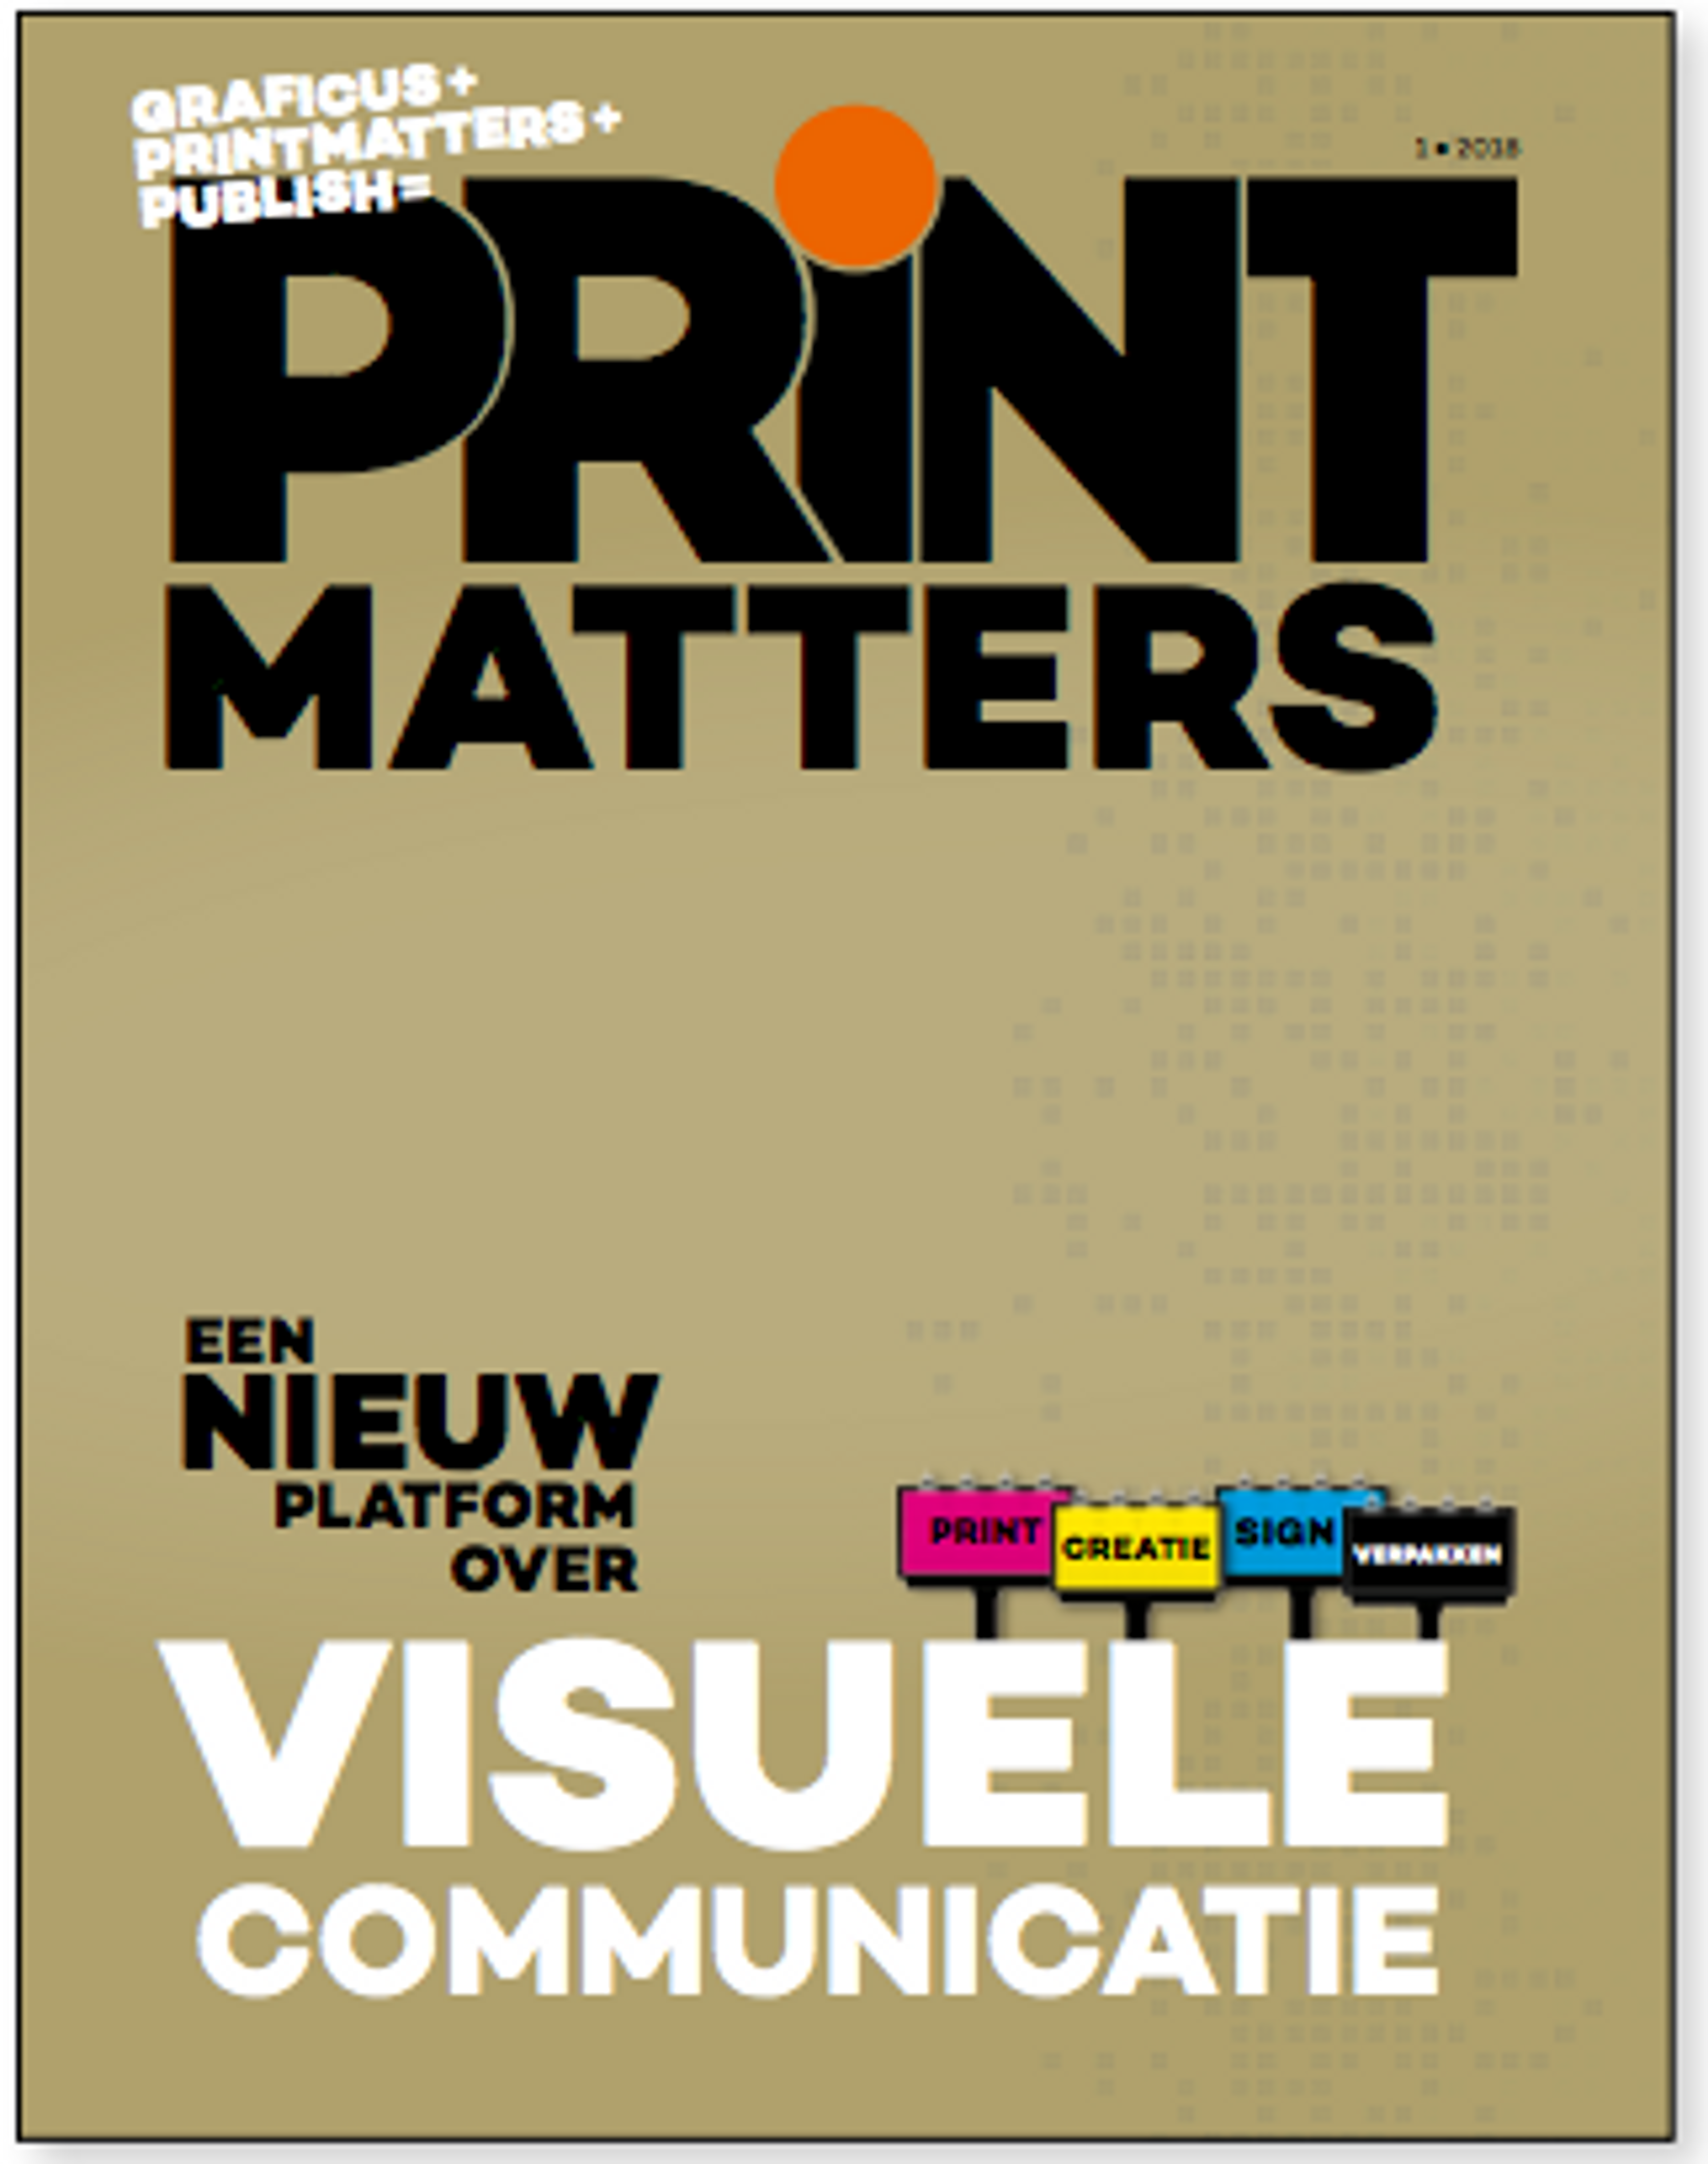 De titels Graficus, Publish en PrintMatters gaan samen verder onder de naam PRINTmatters